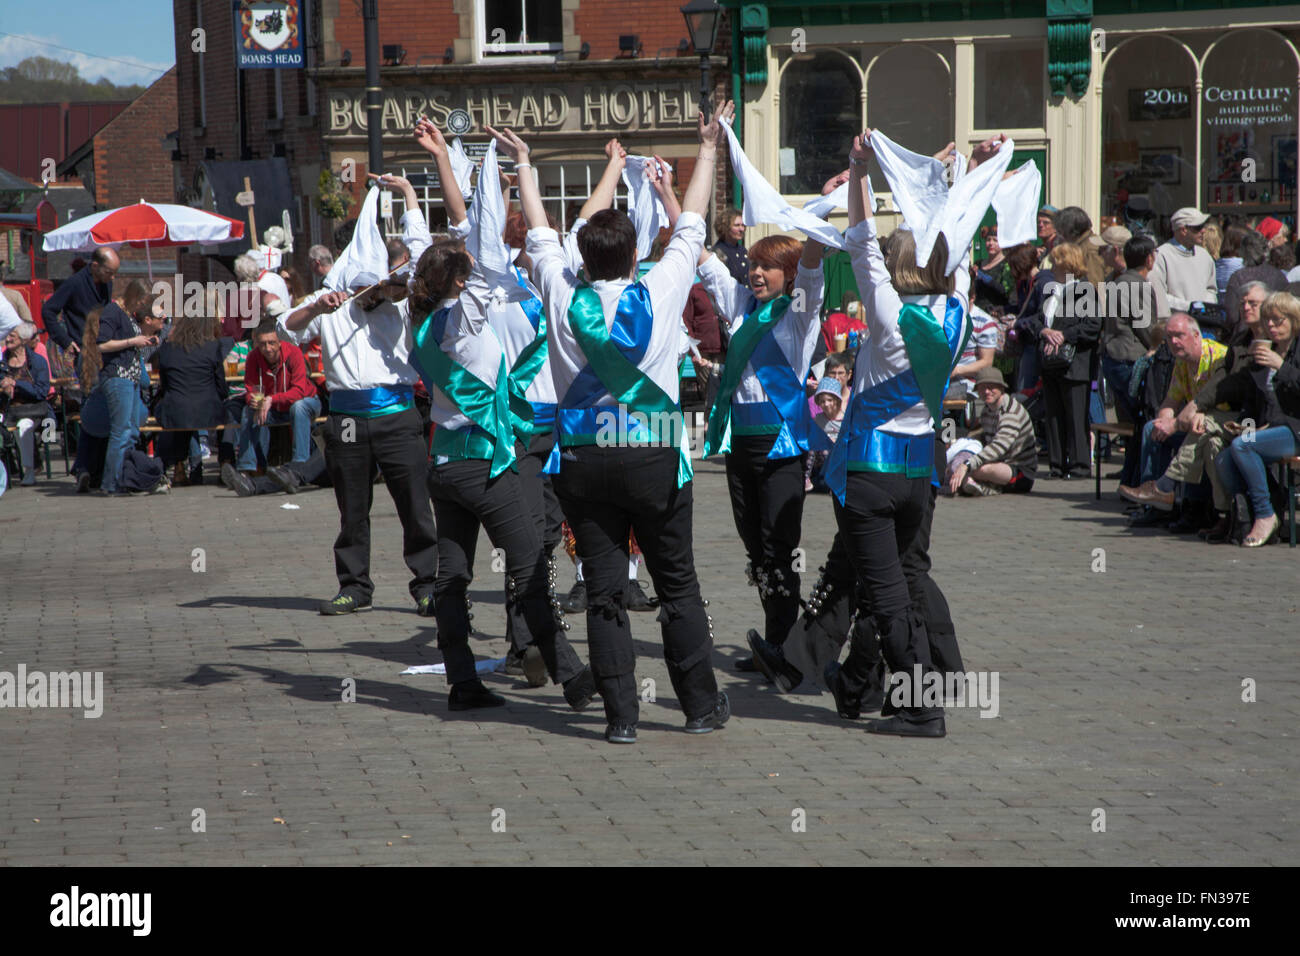 Donna Morris Dancing Gruppo Stockport Folk Festival 2015 Stockport cheshire england Foto Stock